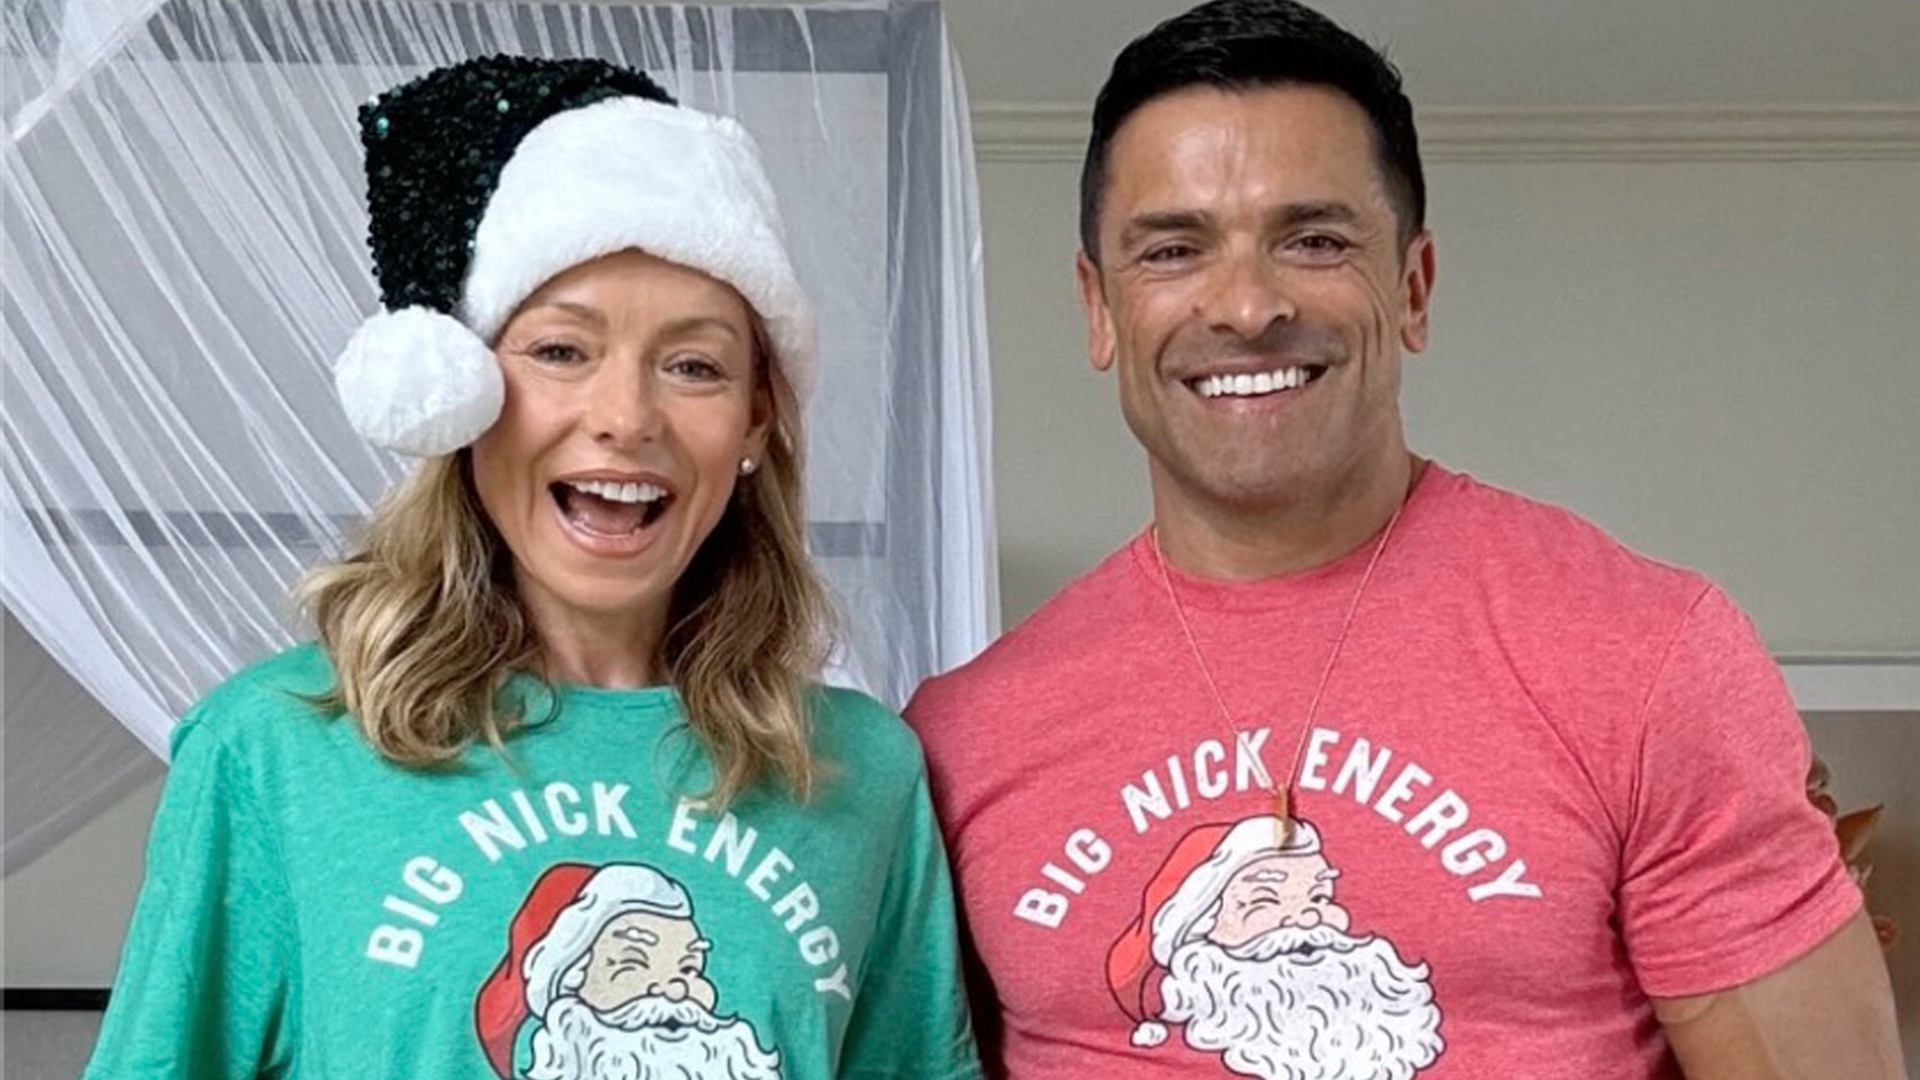 Kelly and Mark on Big Nick Energy Shirt